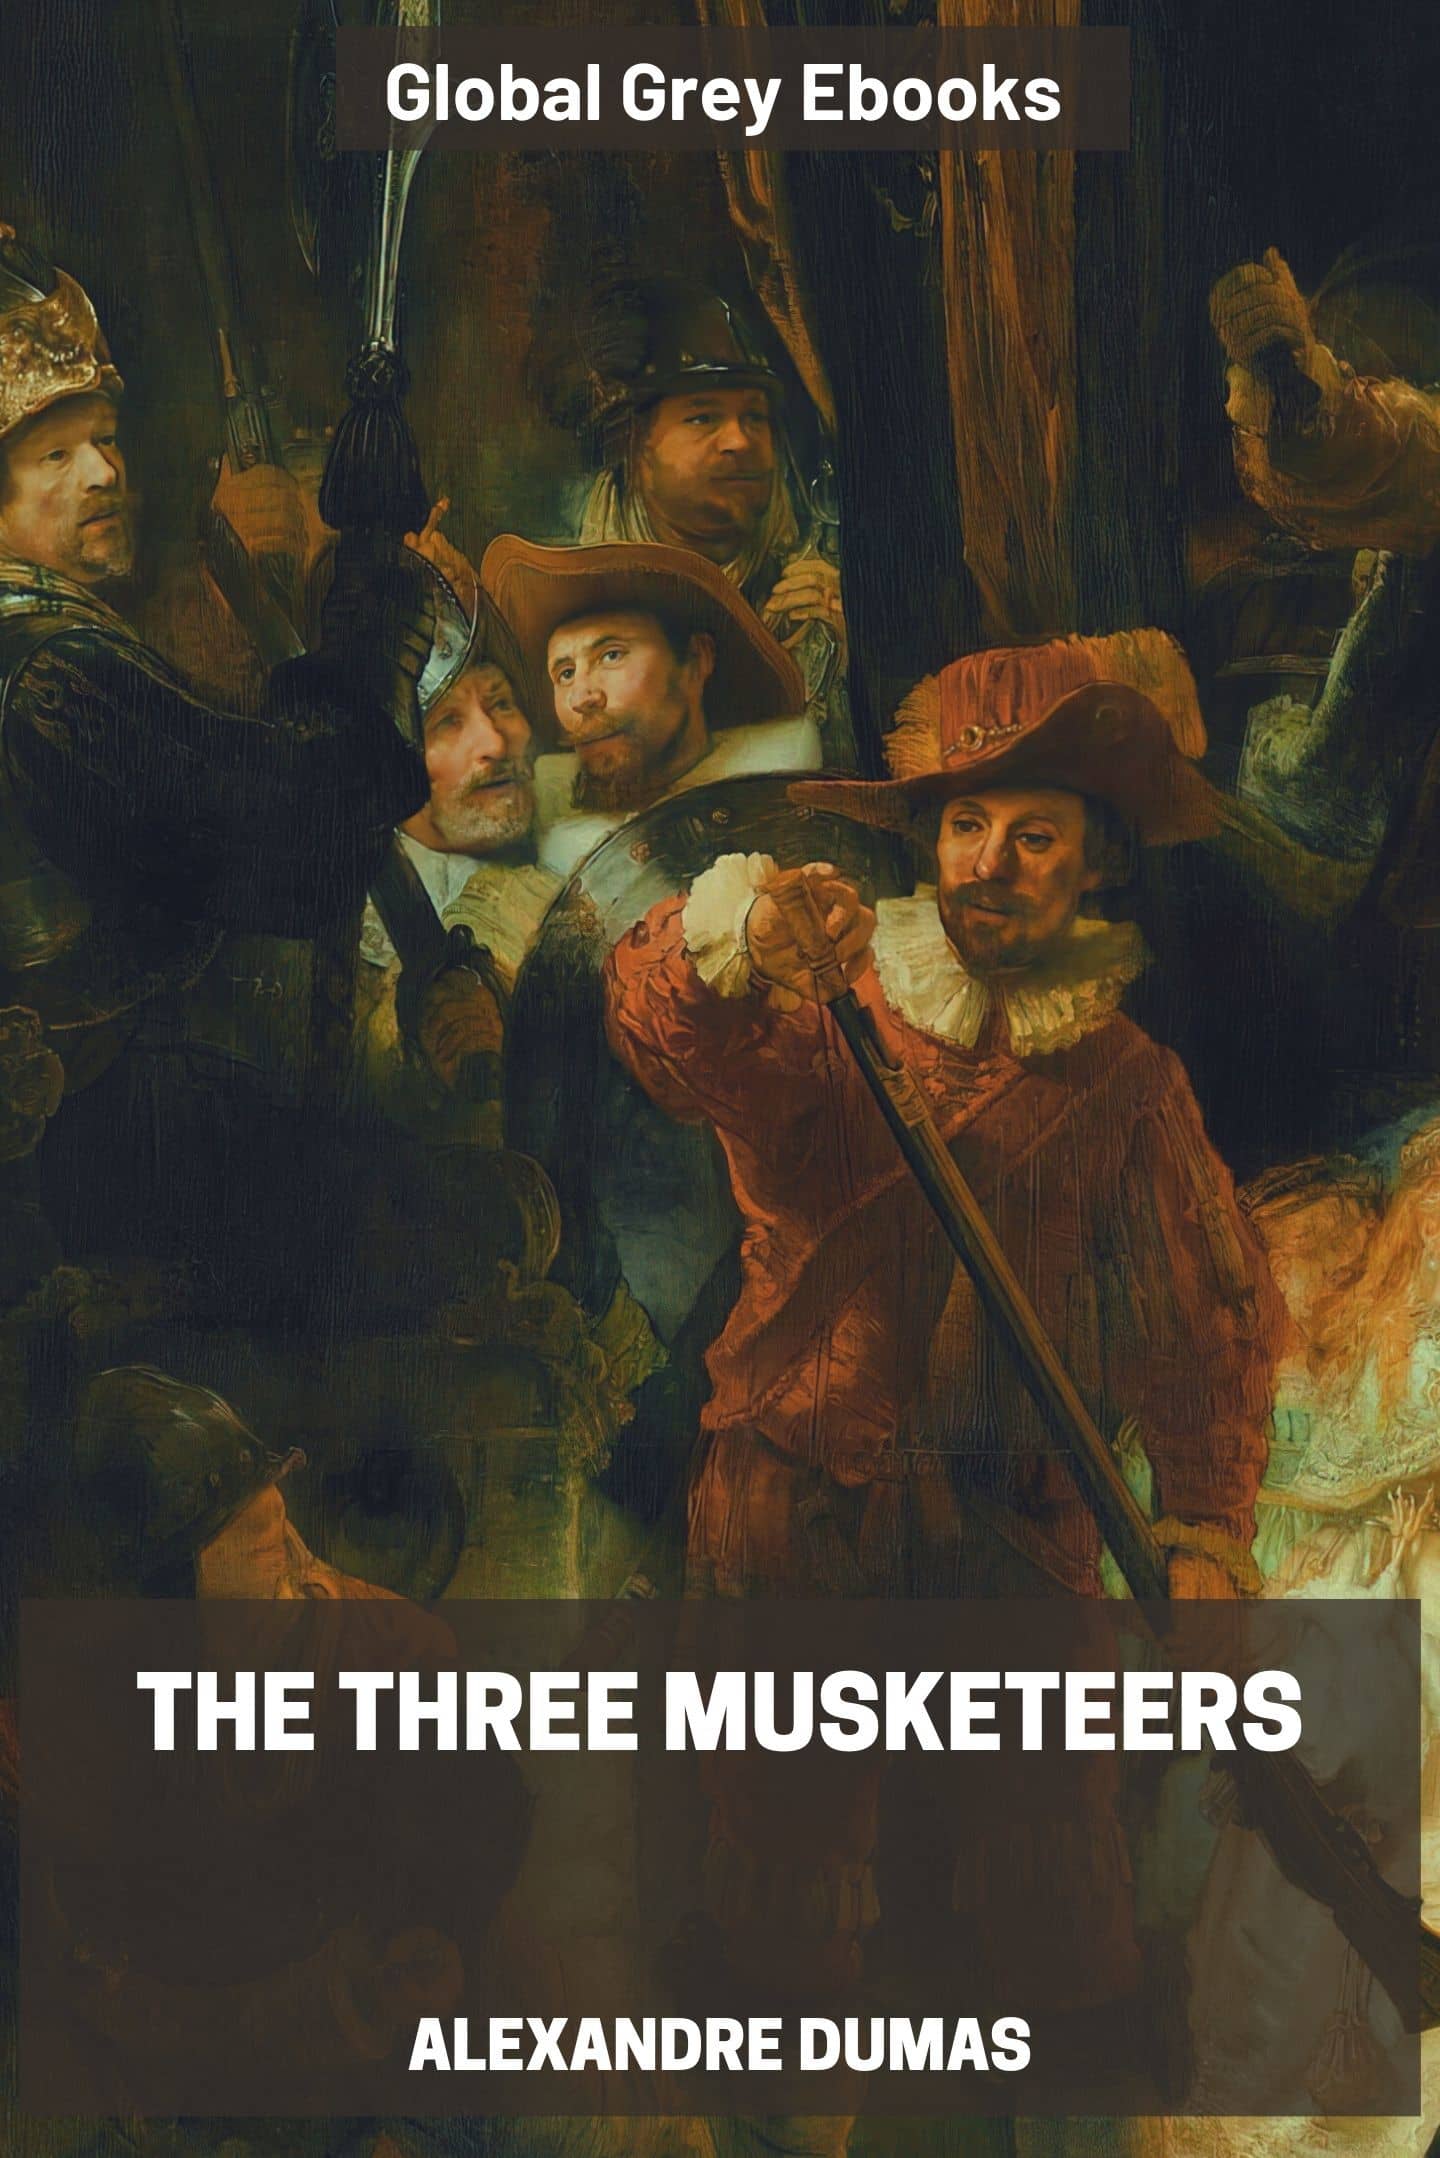 The Three Musketeers by Alexandre Dumas - Free ebook - Global Grey ebooks